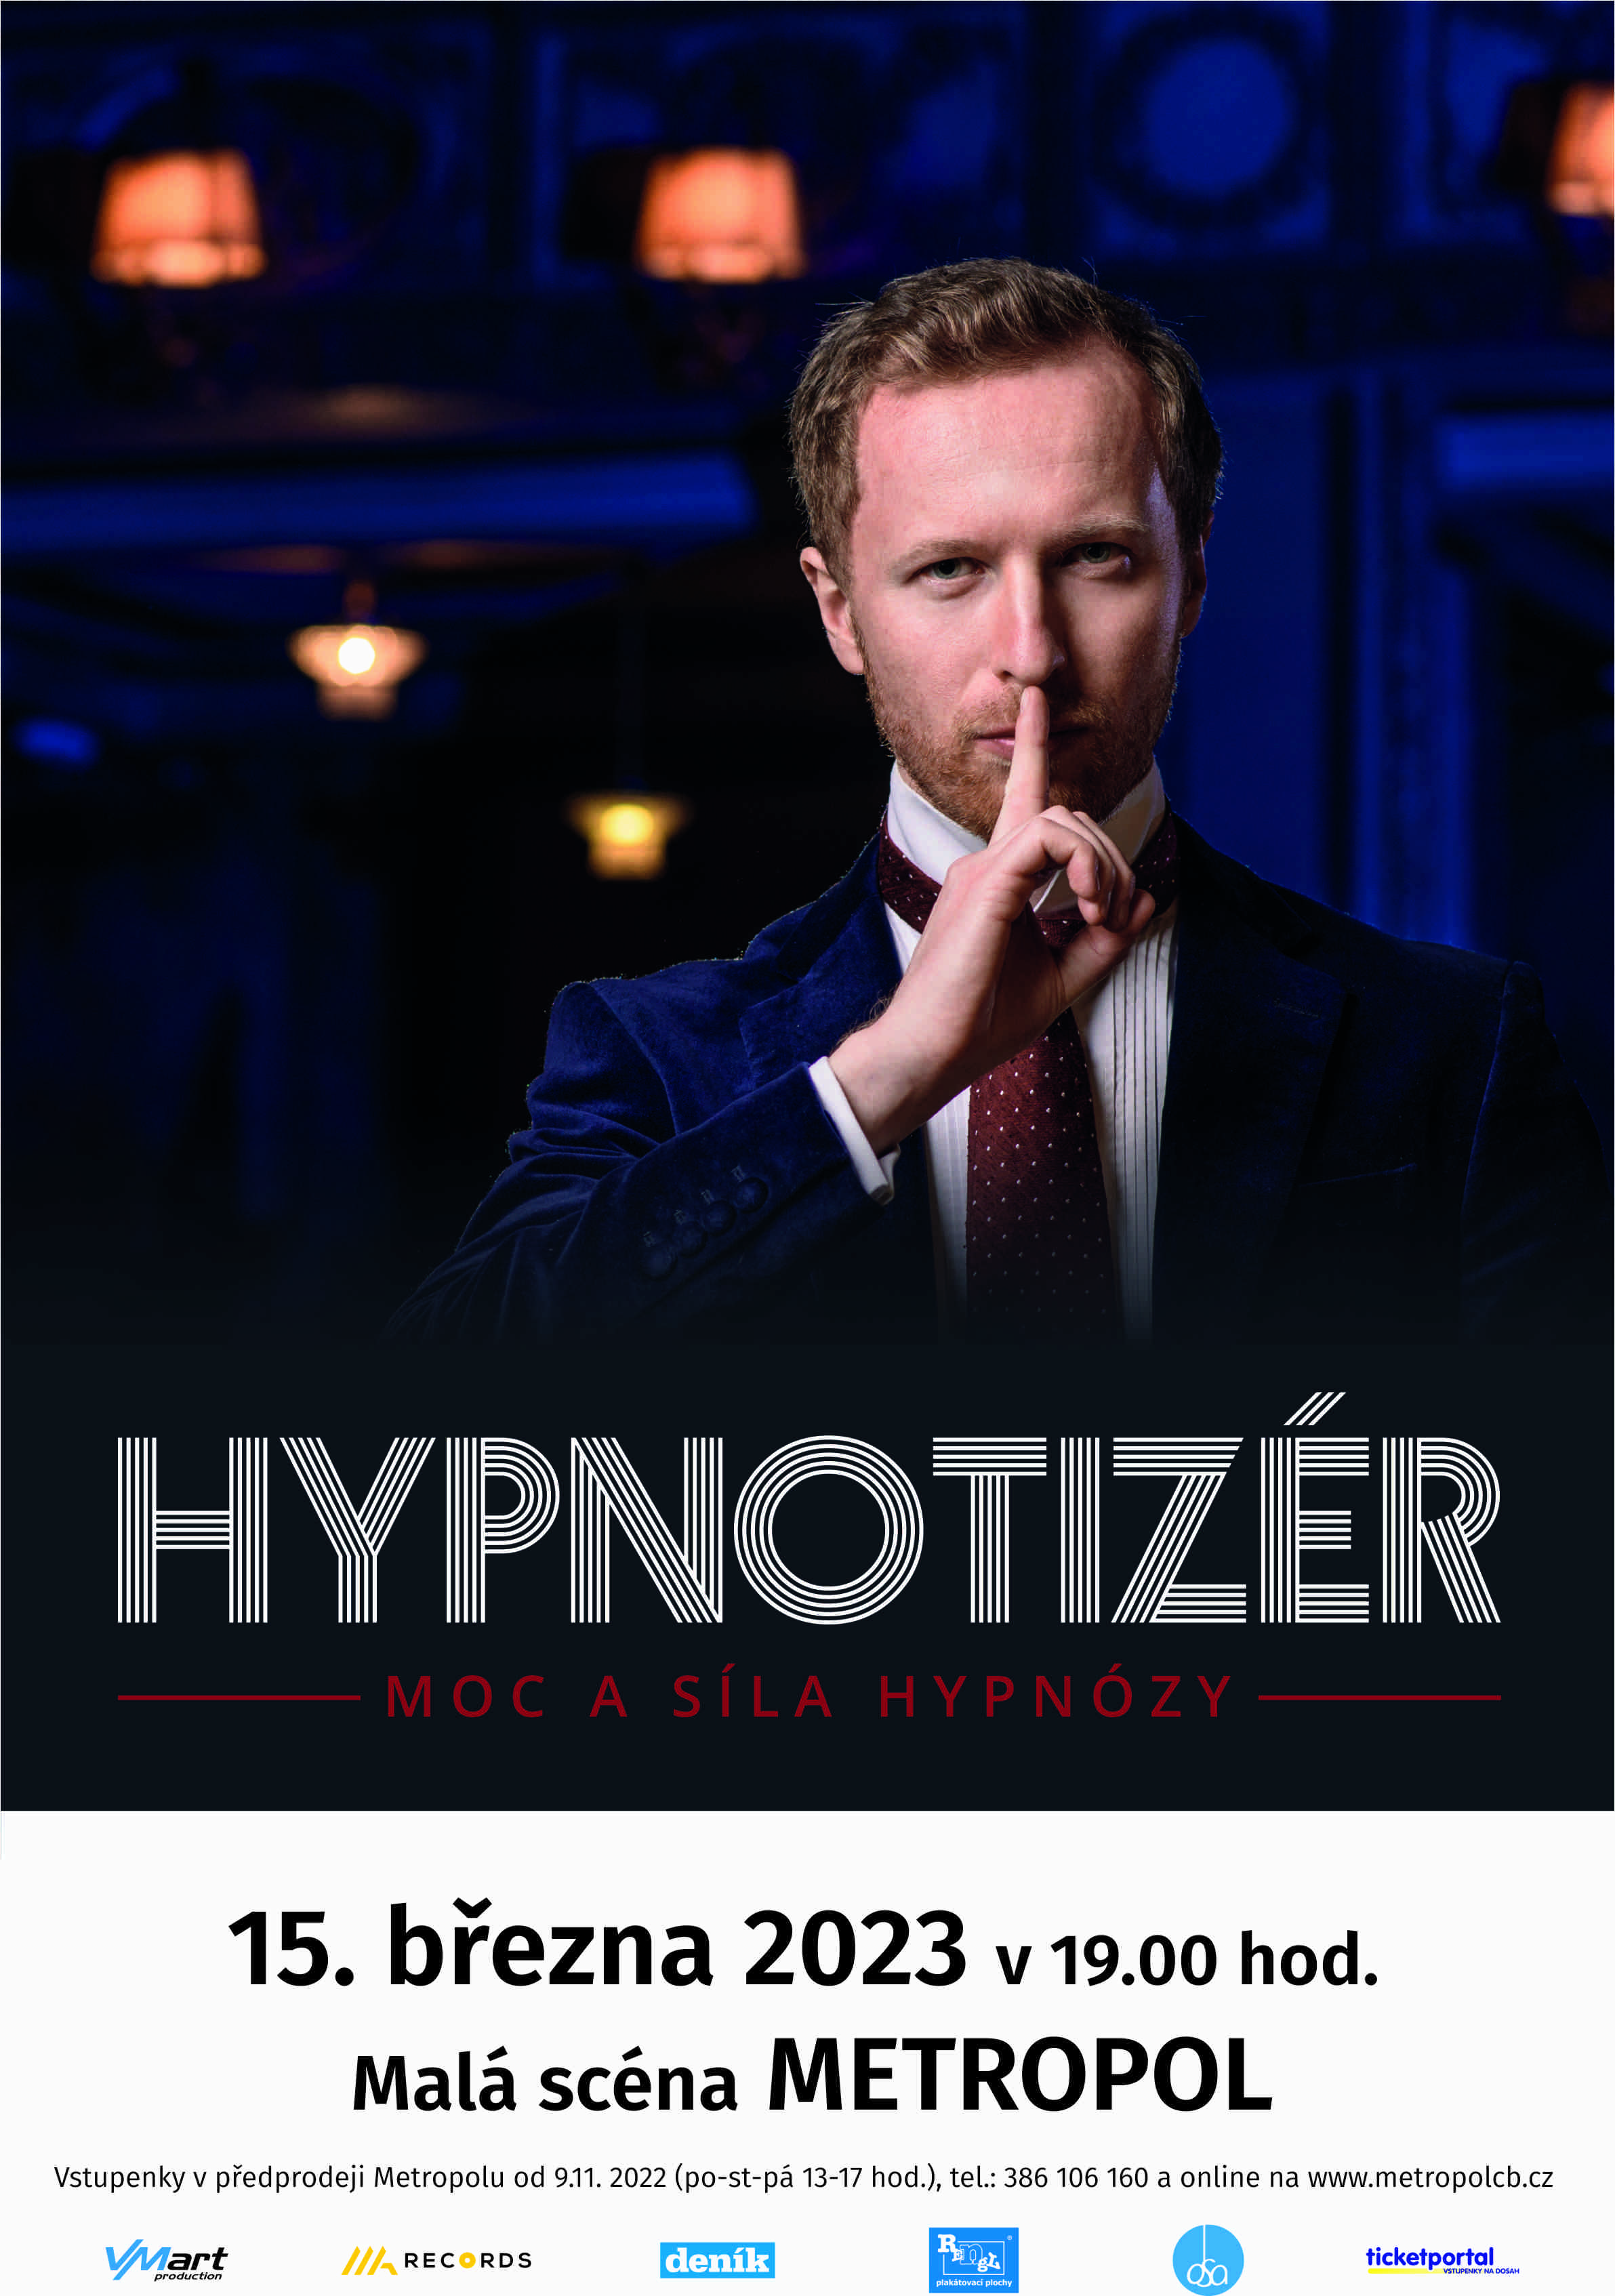 Hypnotizér, moc a síla hypnózy